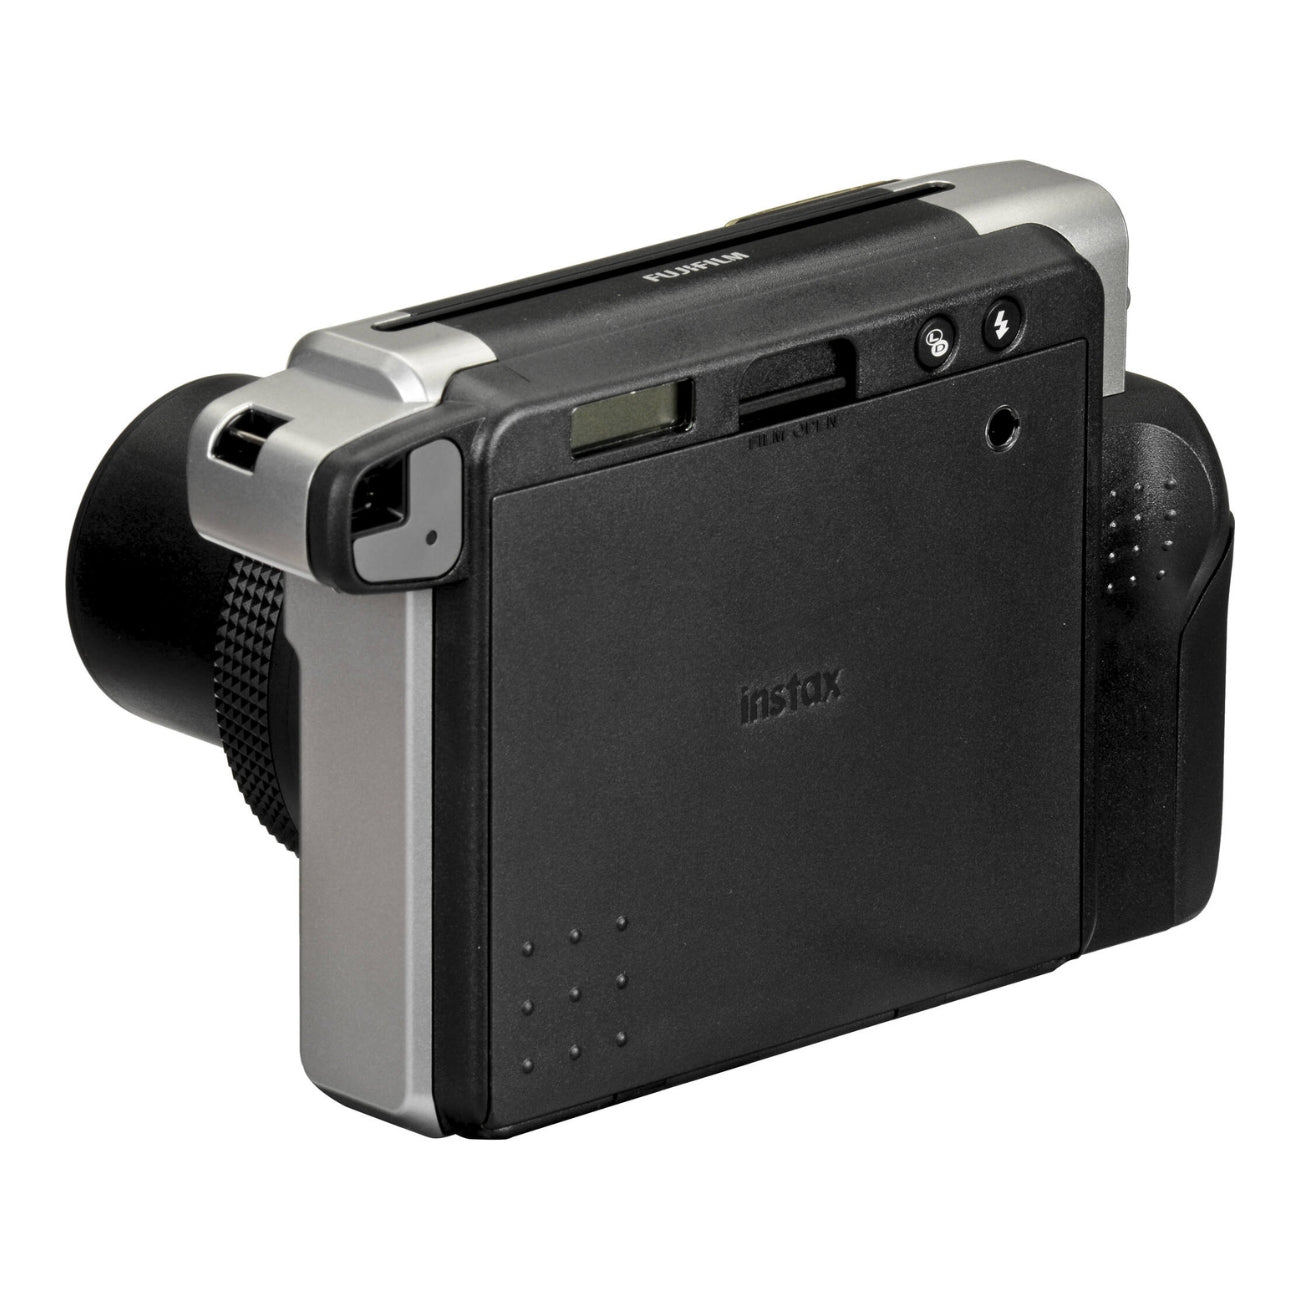 Fujifilm - Instax Wide 300 Instant Film Camera